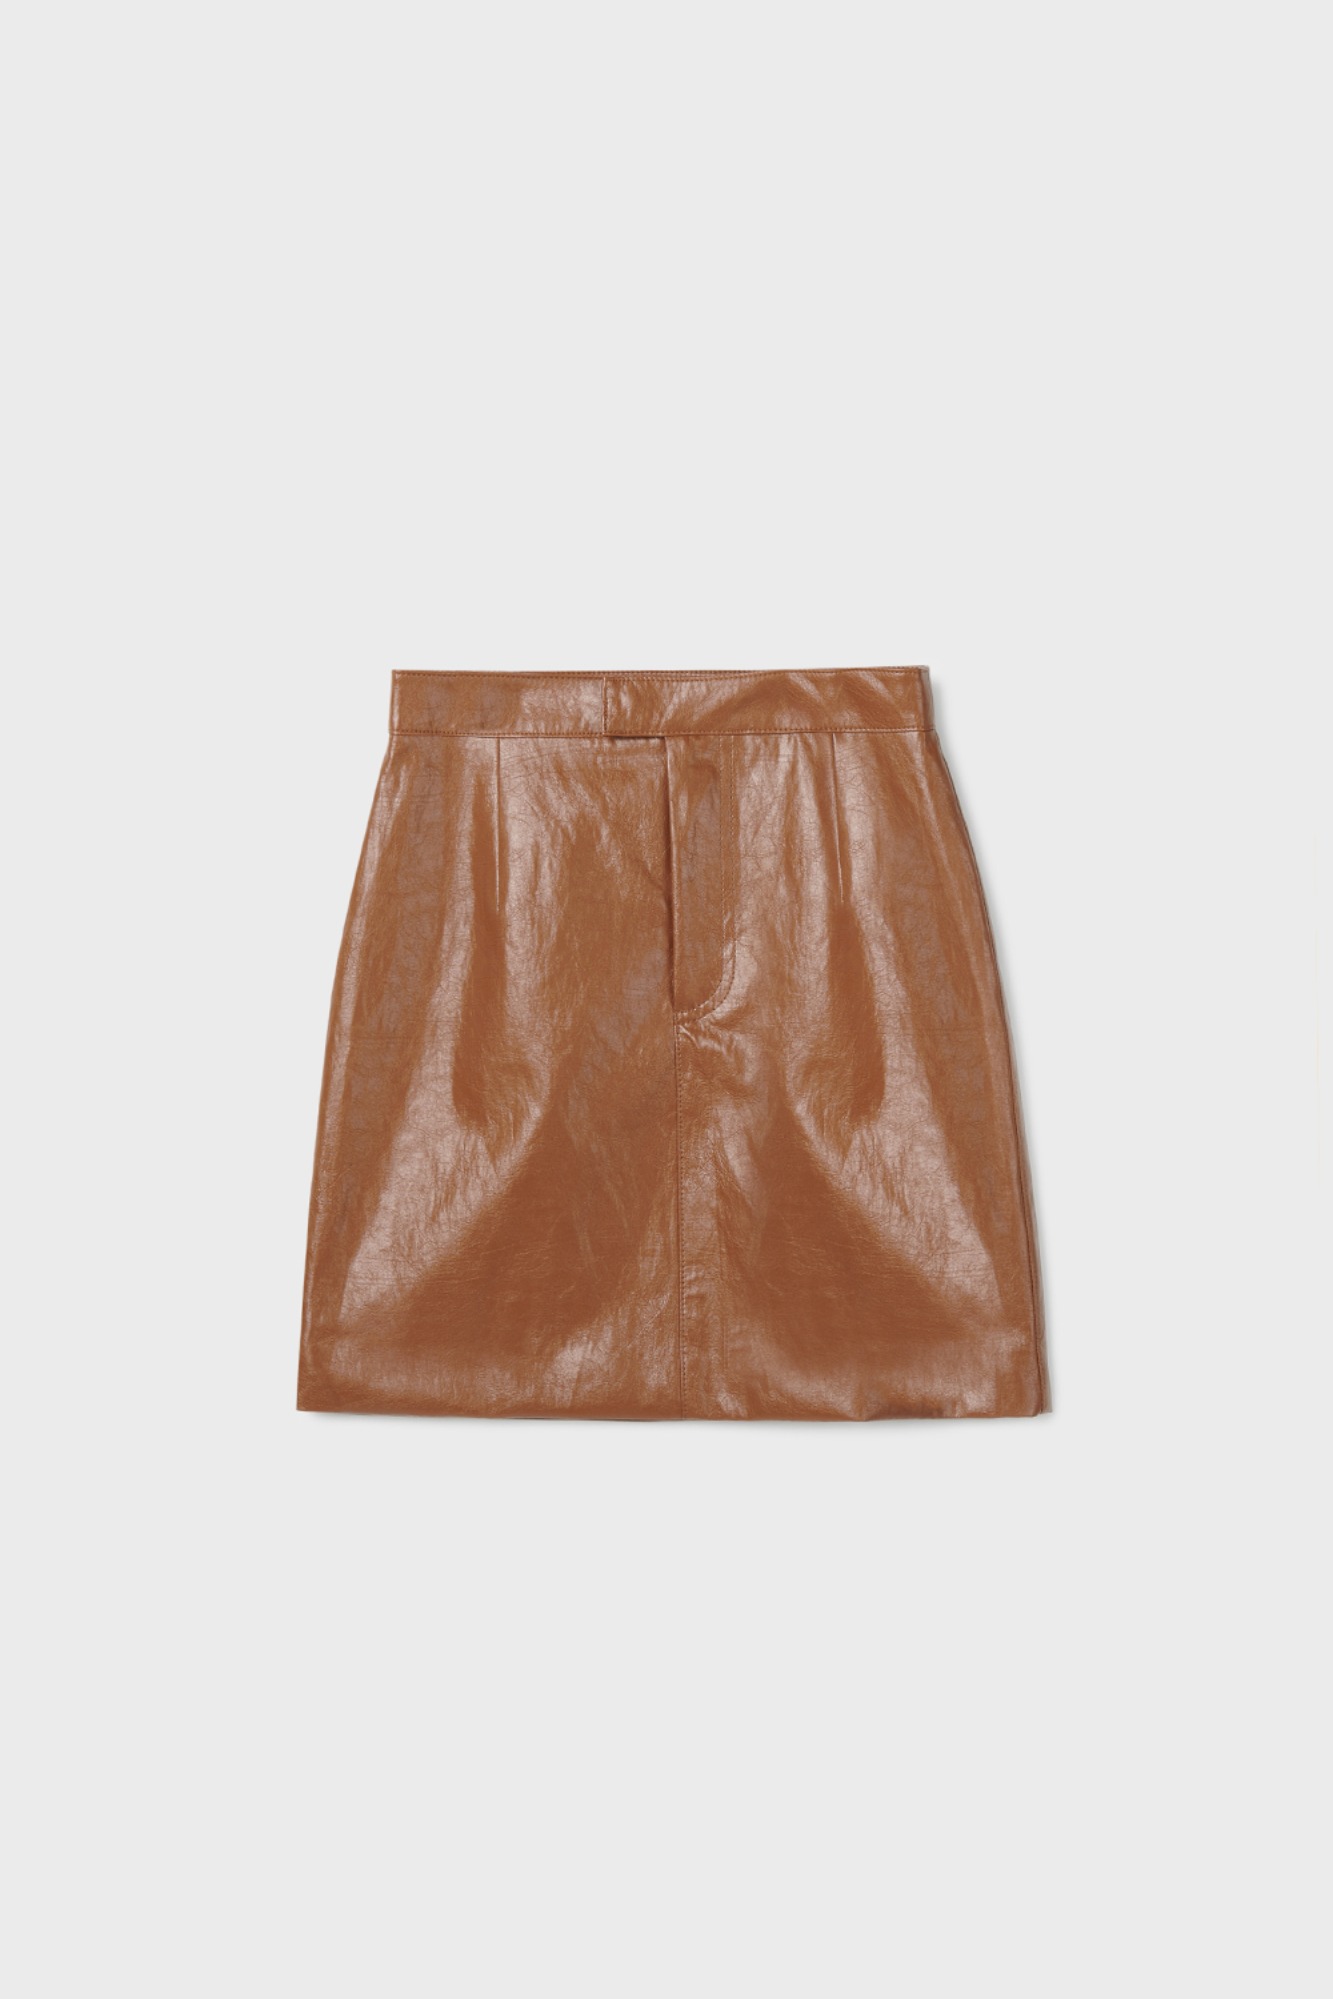 Tiana Vintage Skirt